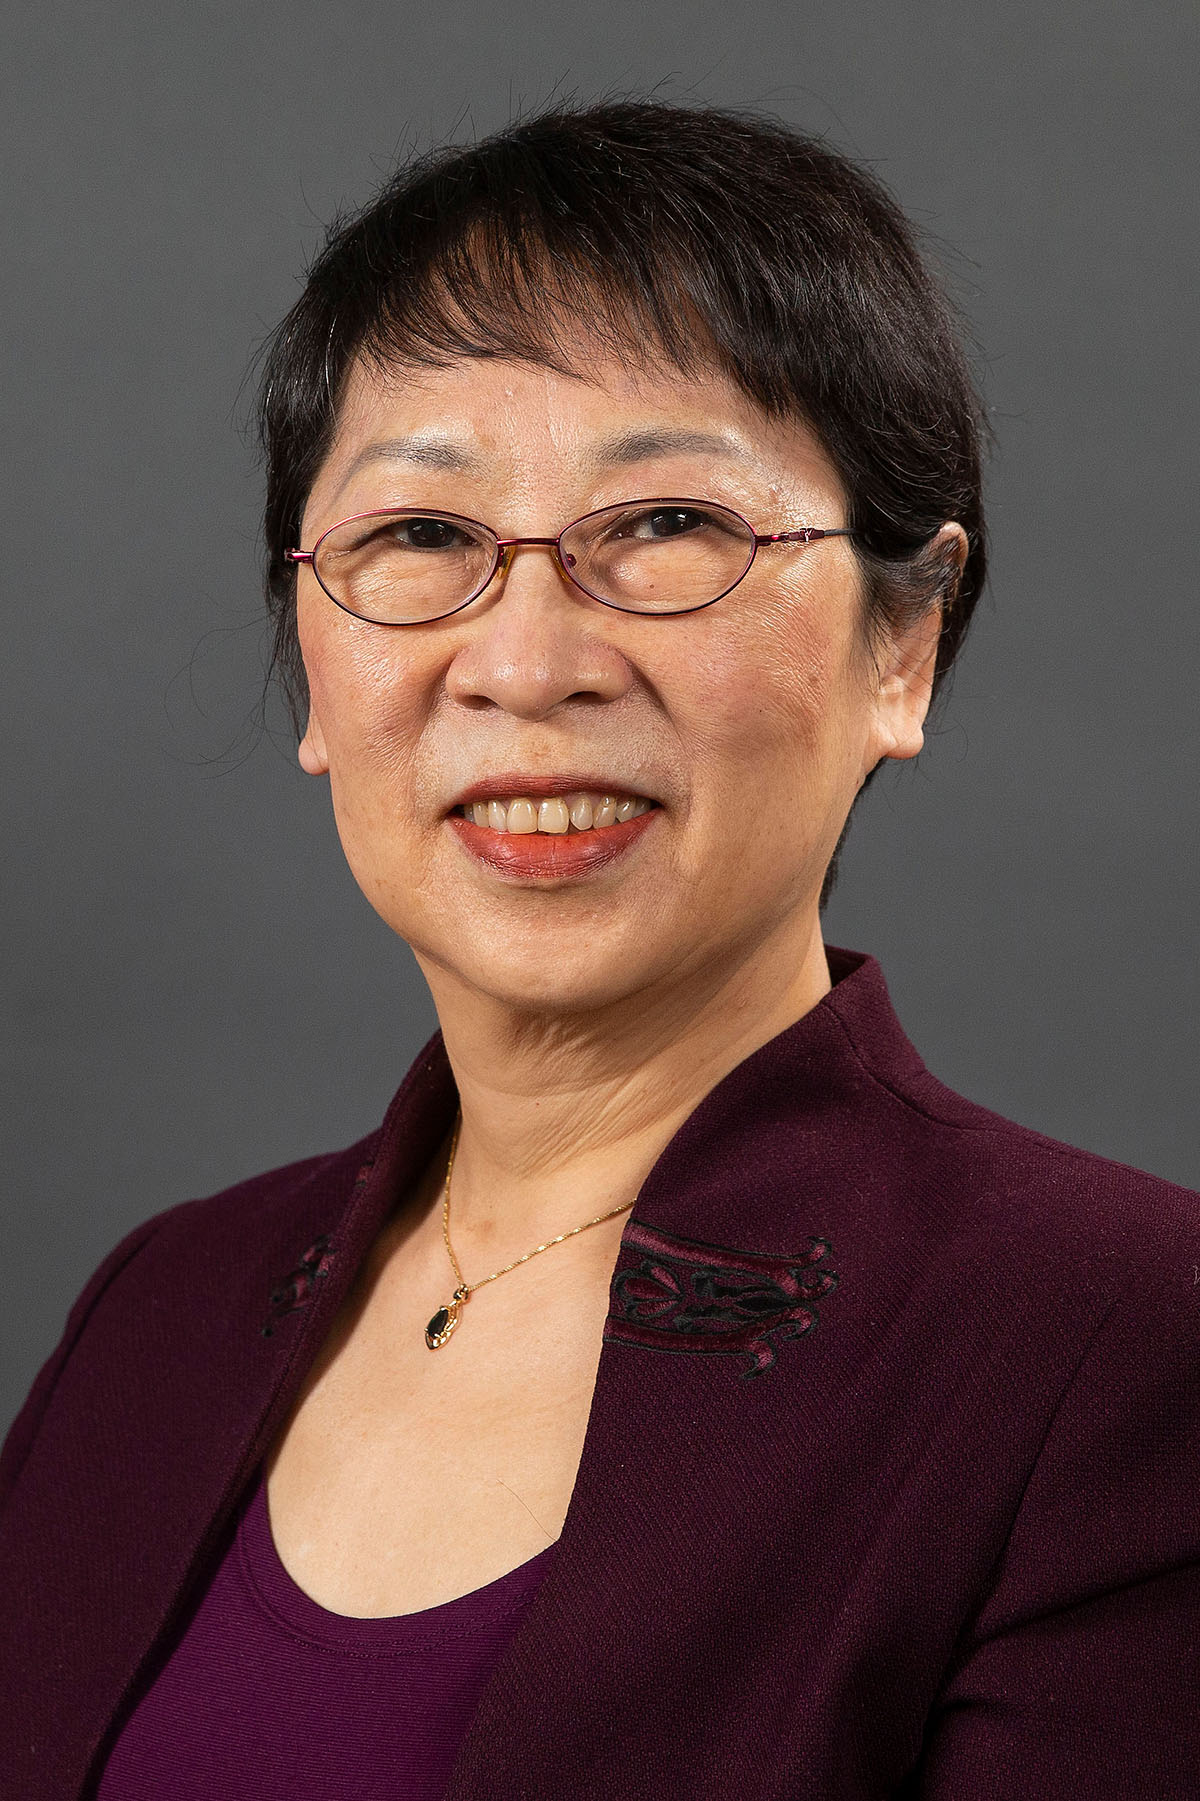 Peipei Qiu wearing a burgundy shirt and jacket